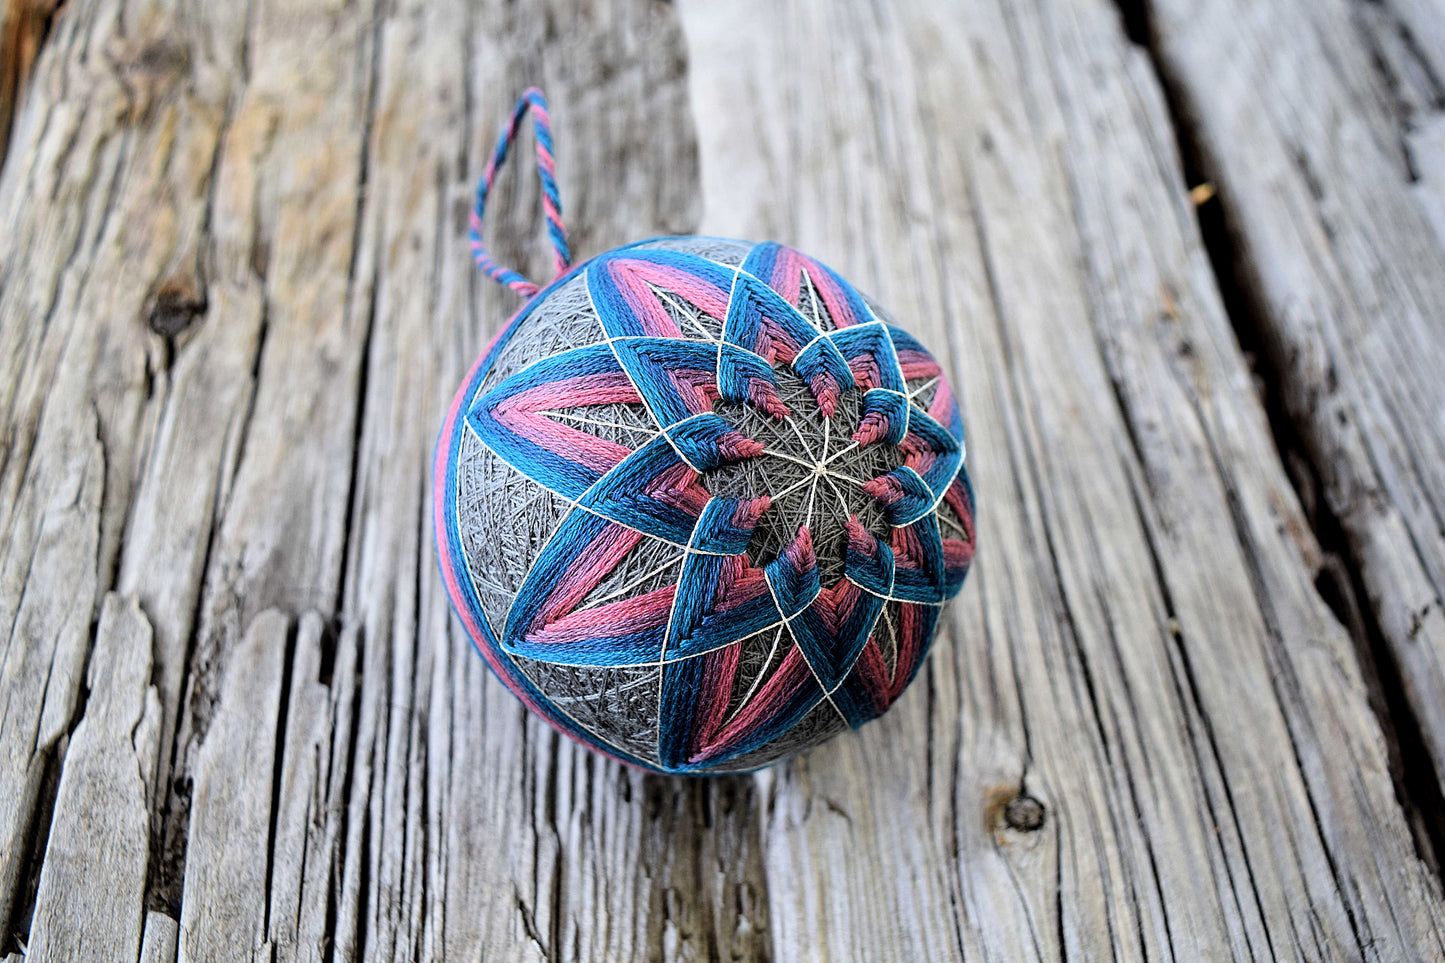 Kiku temari ball in cotton candy colors on grey base